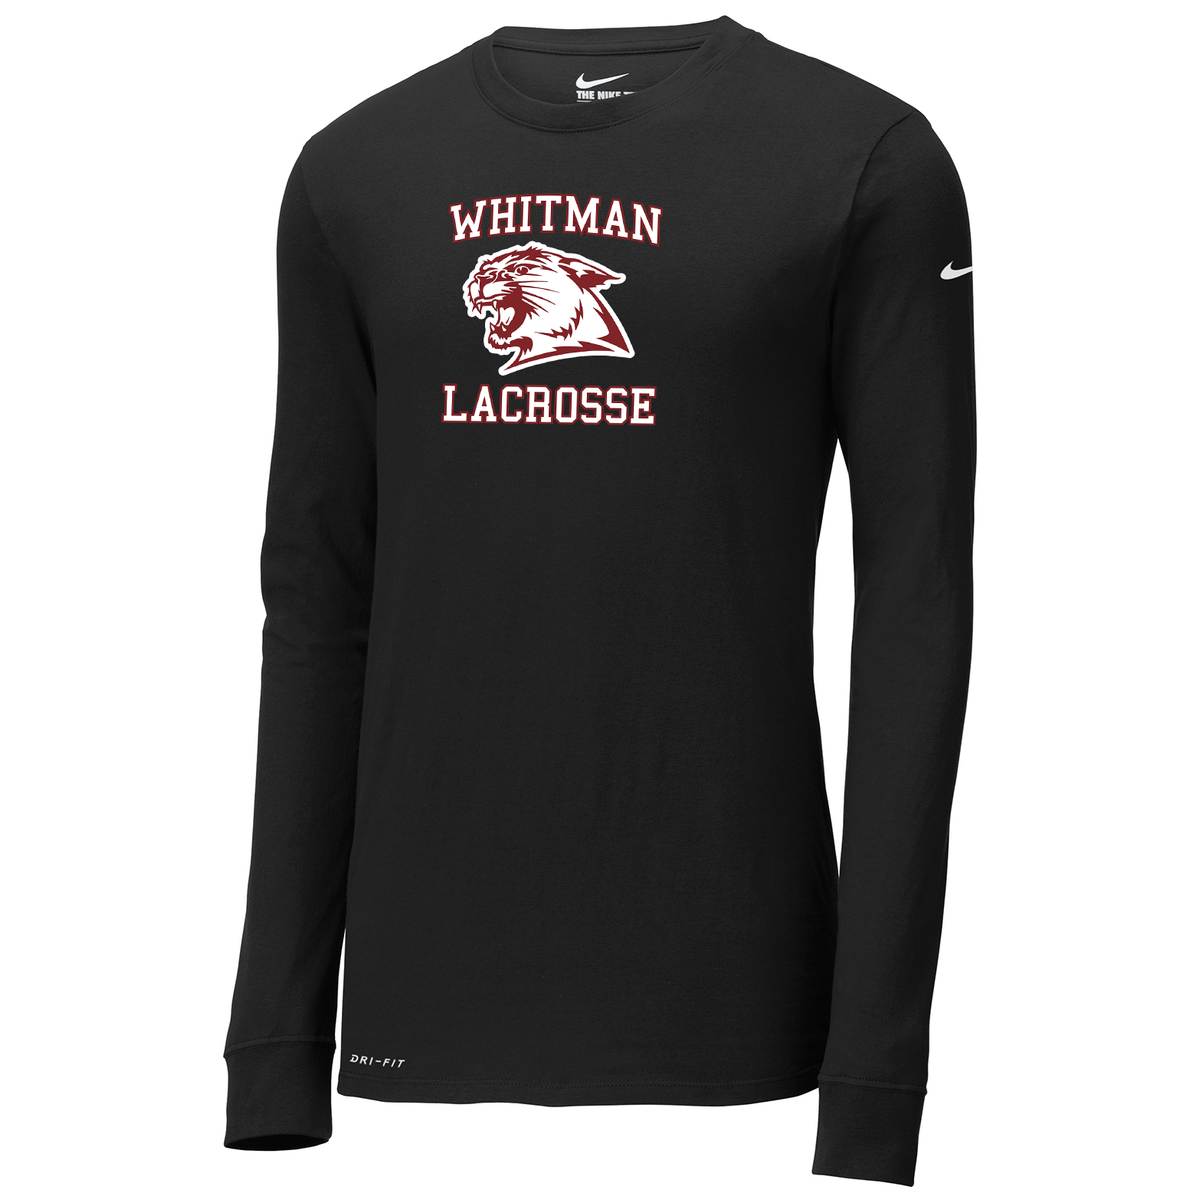 Whitman Lacrosse Nike Dri-FIT Long Sleeve Tee